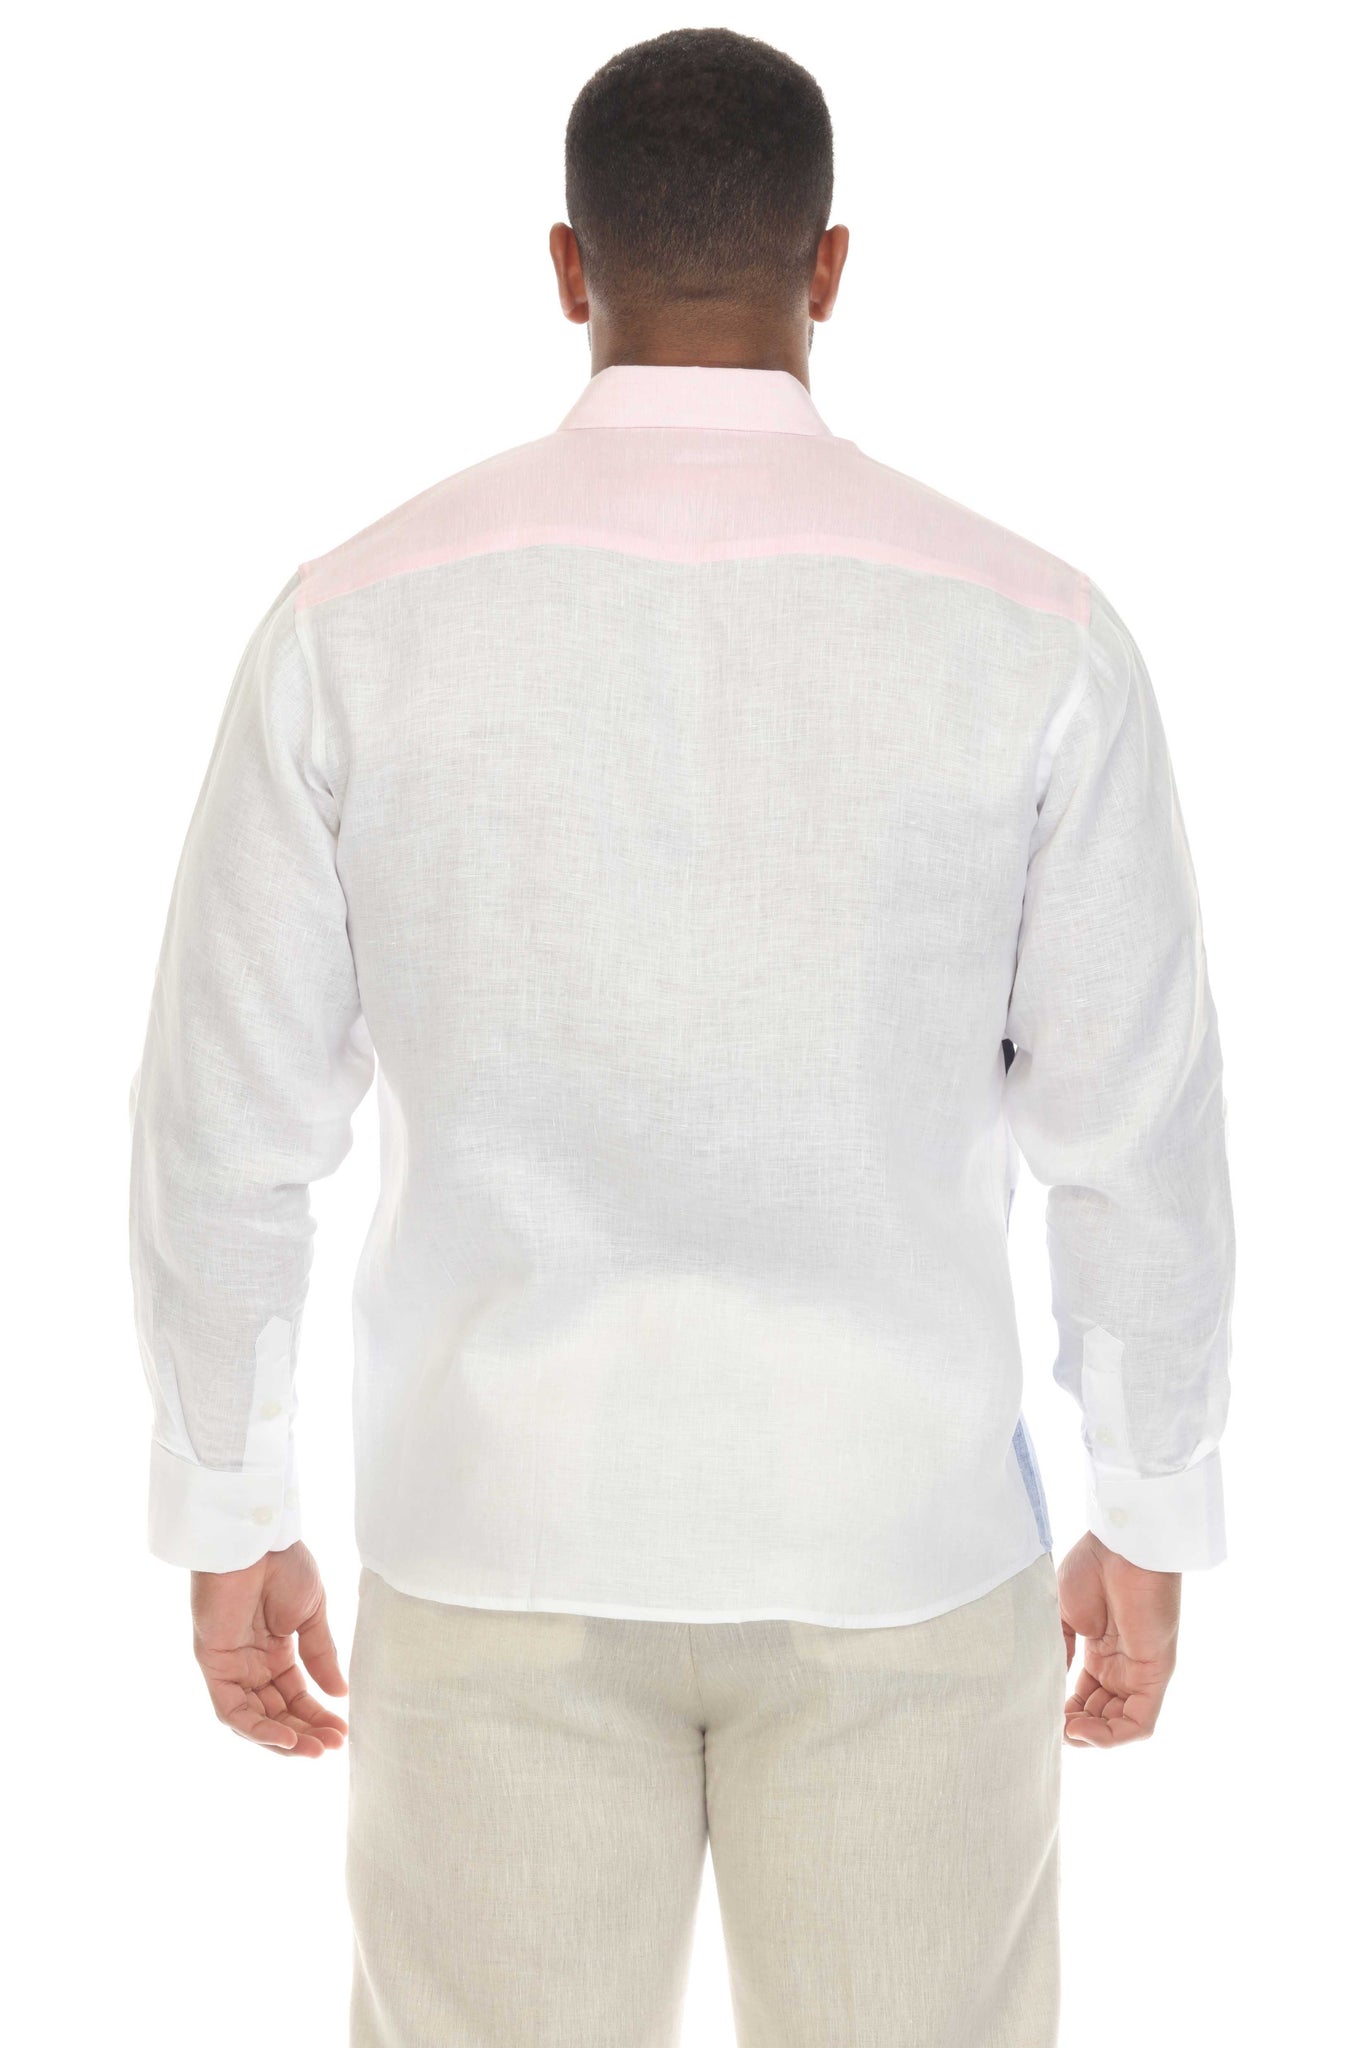 Slim Fit Casual 100% Linen Shirt Long Sleeve Multi Color Block Design